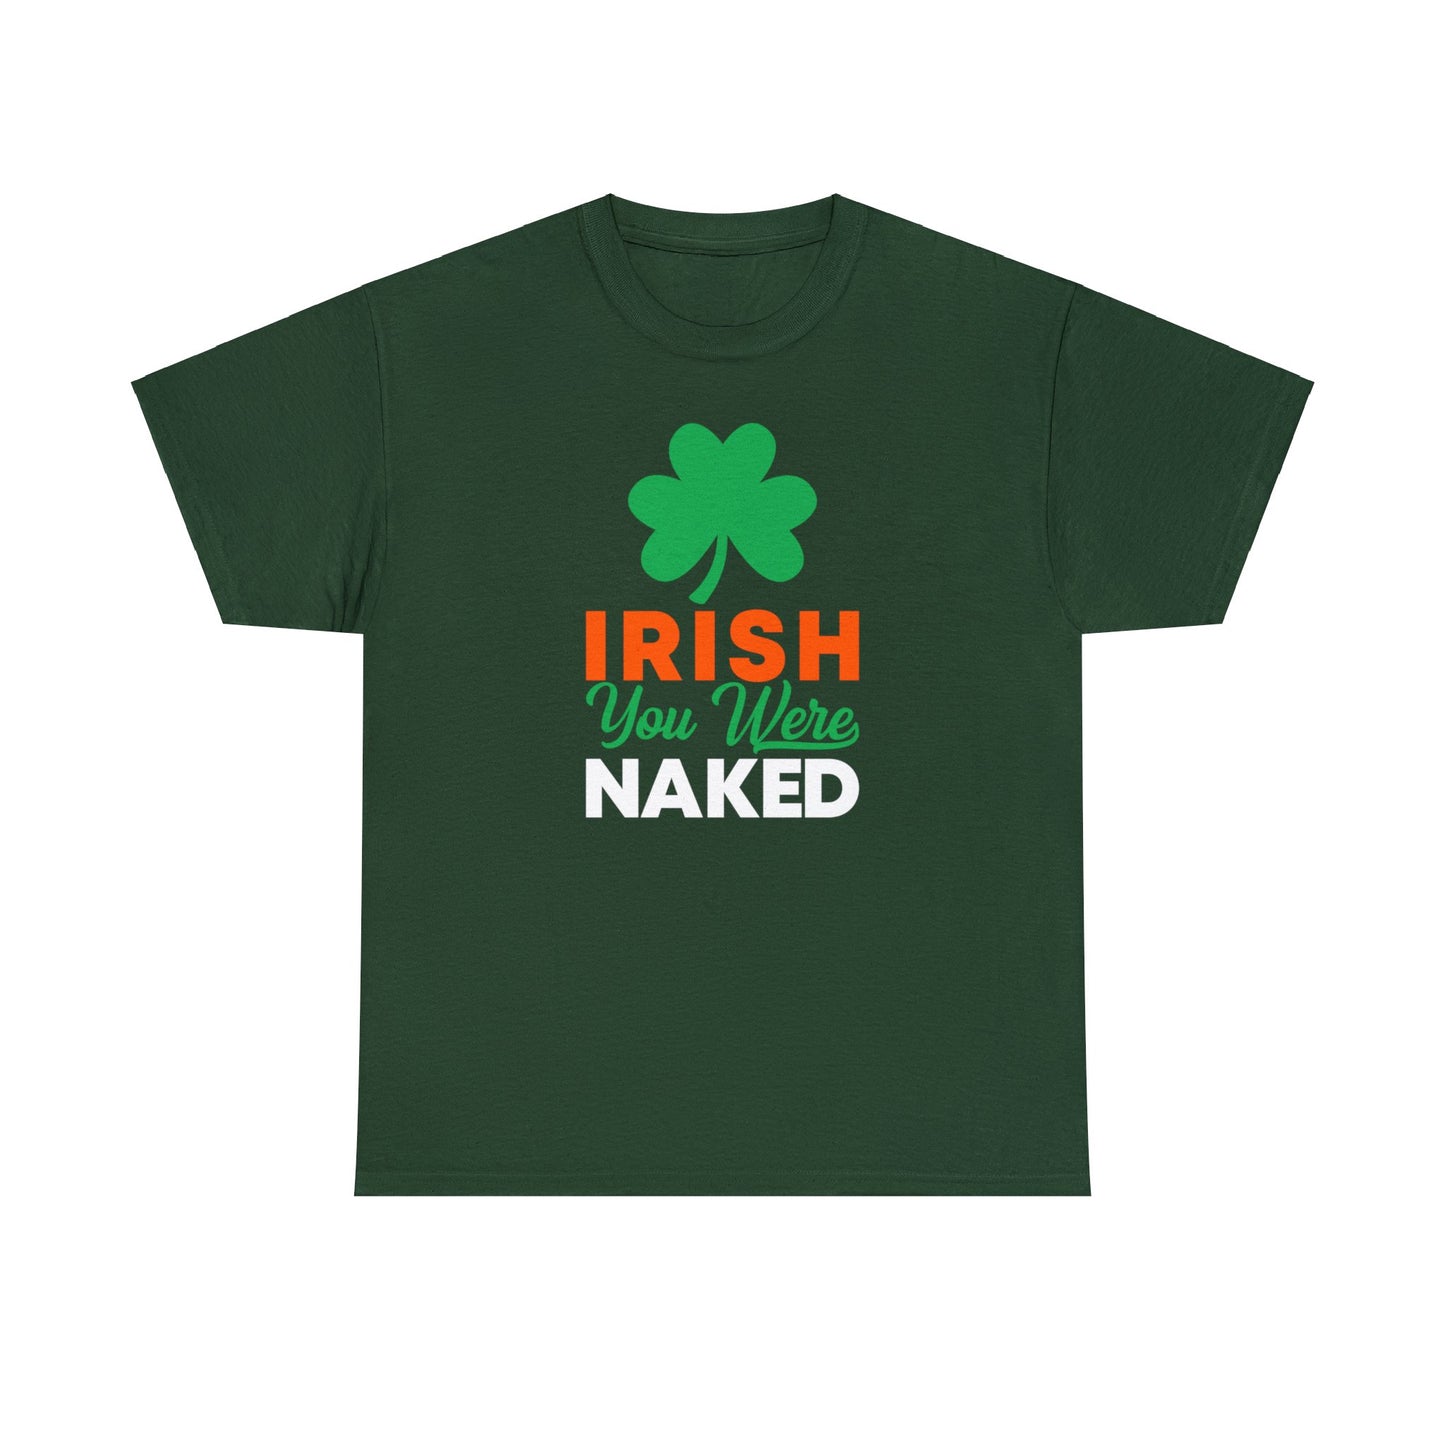 Sarcastic Irish T-Shirt For Shenanigans TShirt For St. Patrick's Day T Shirt